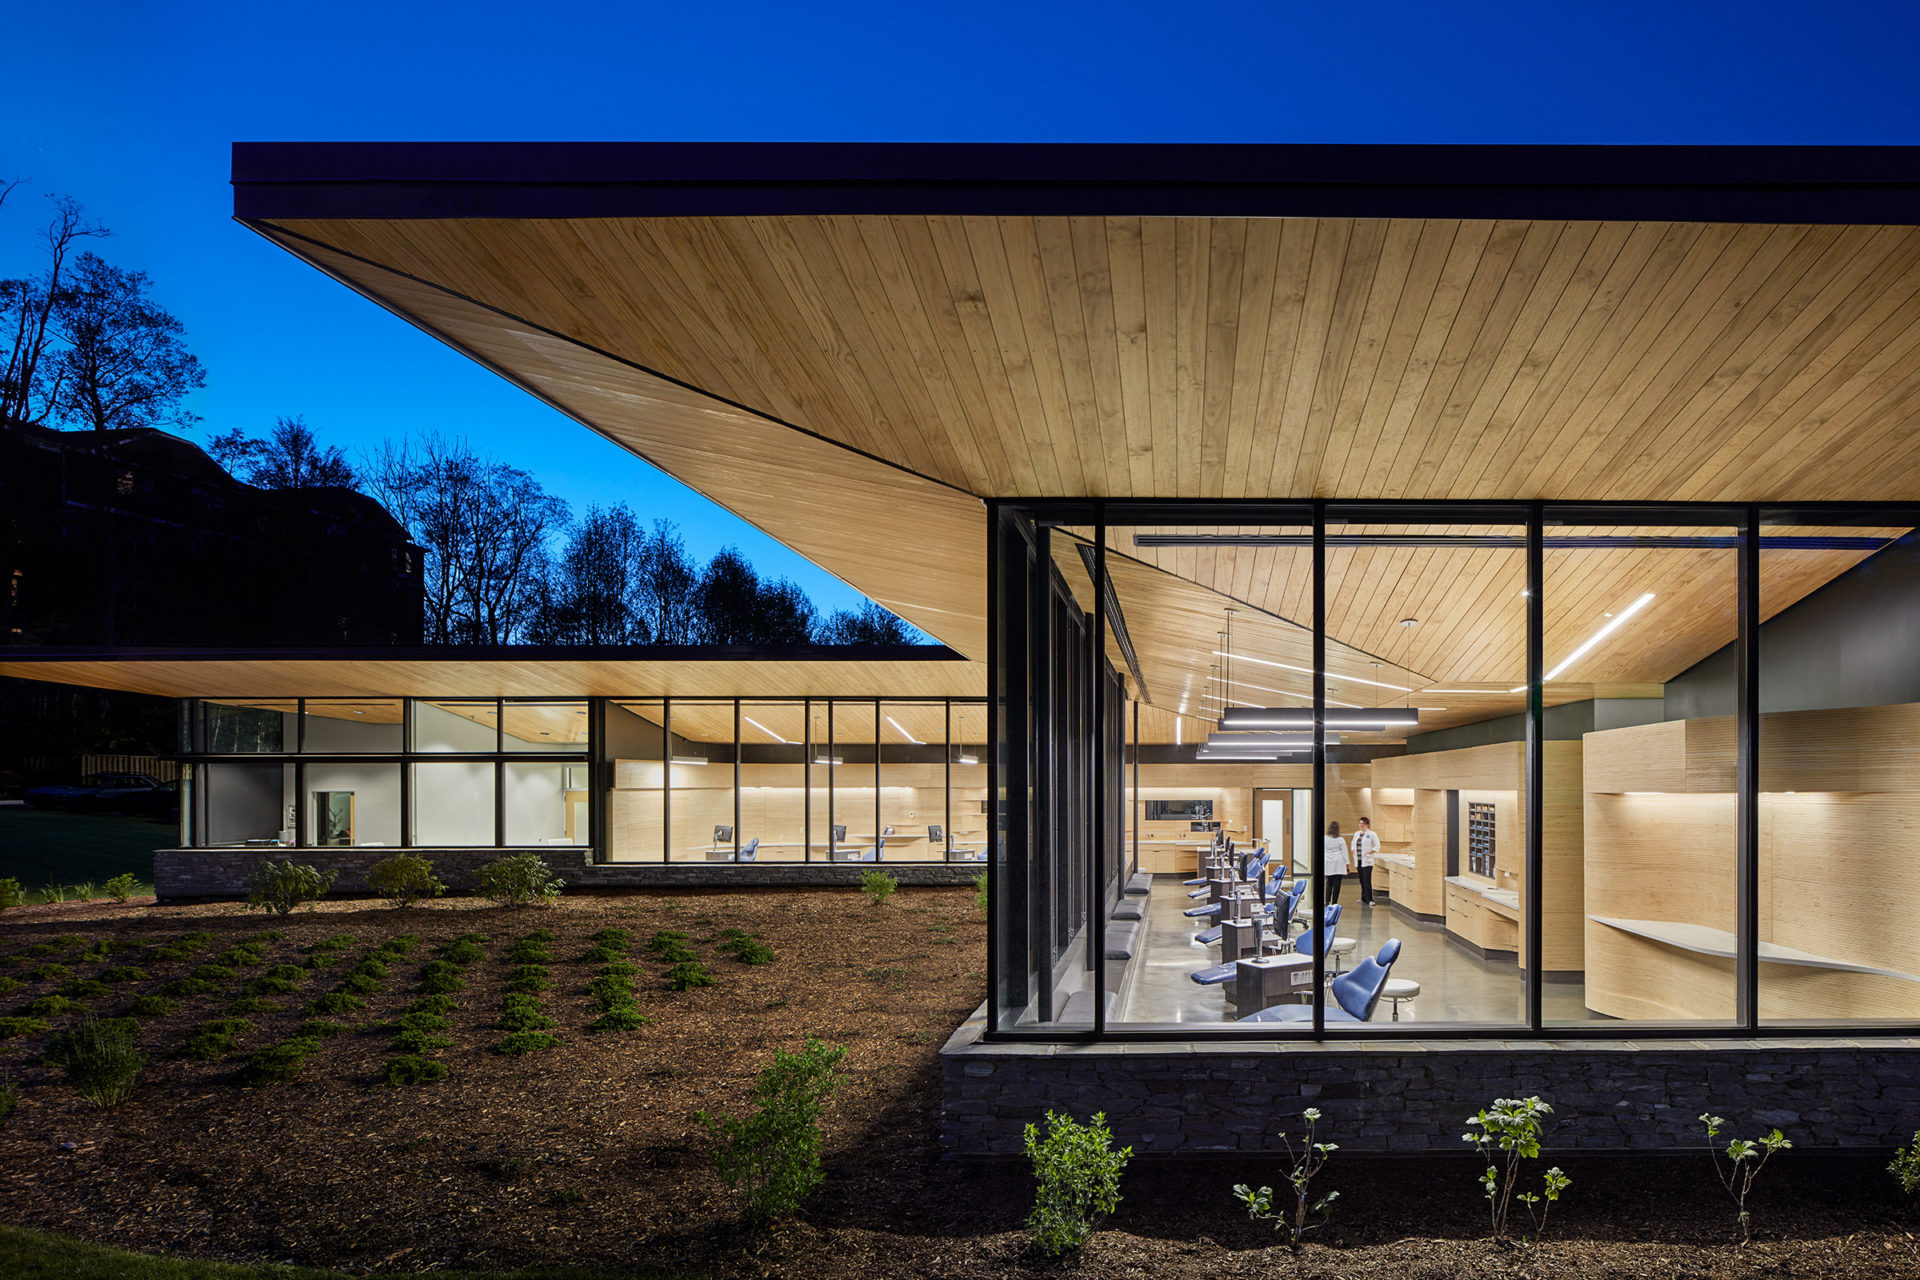 Blue Ridge Orthodontics in Asheville, NC; Architect: Clark Nexsen